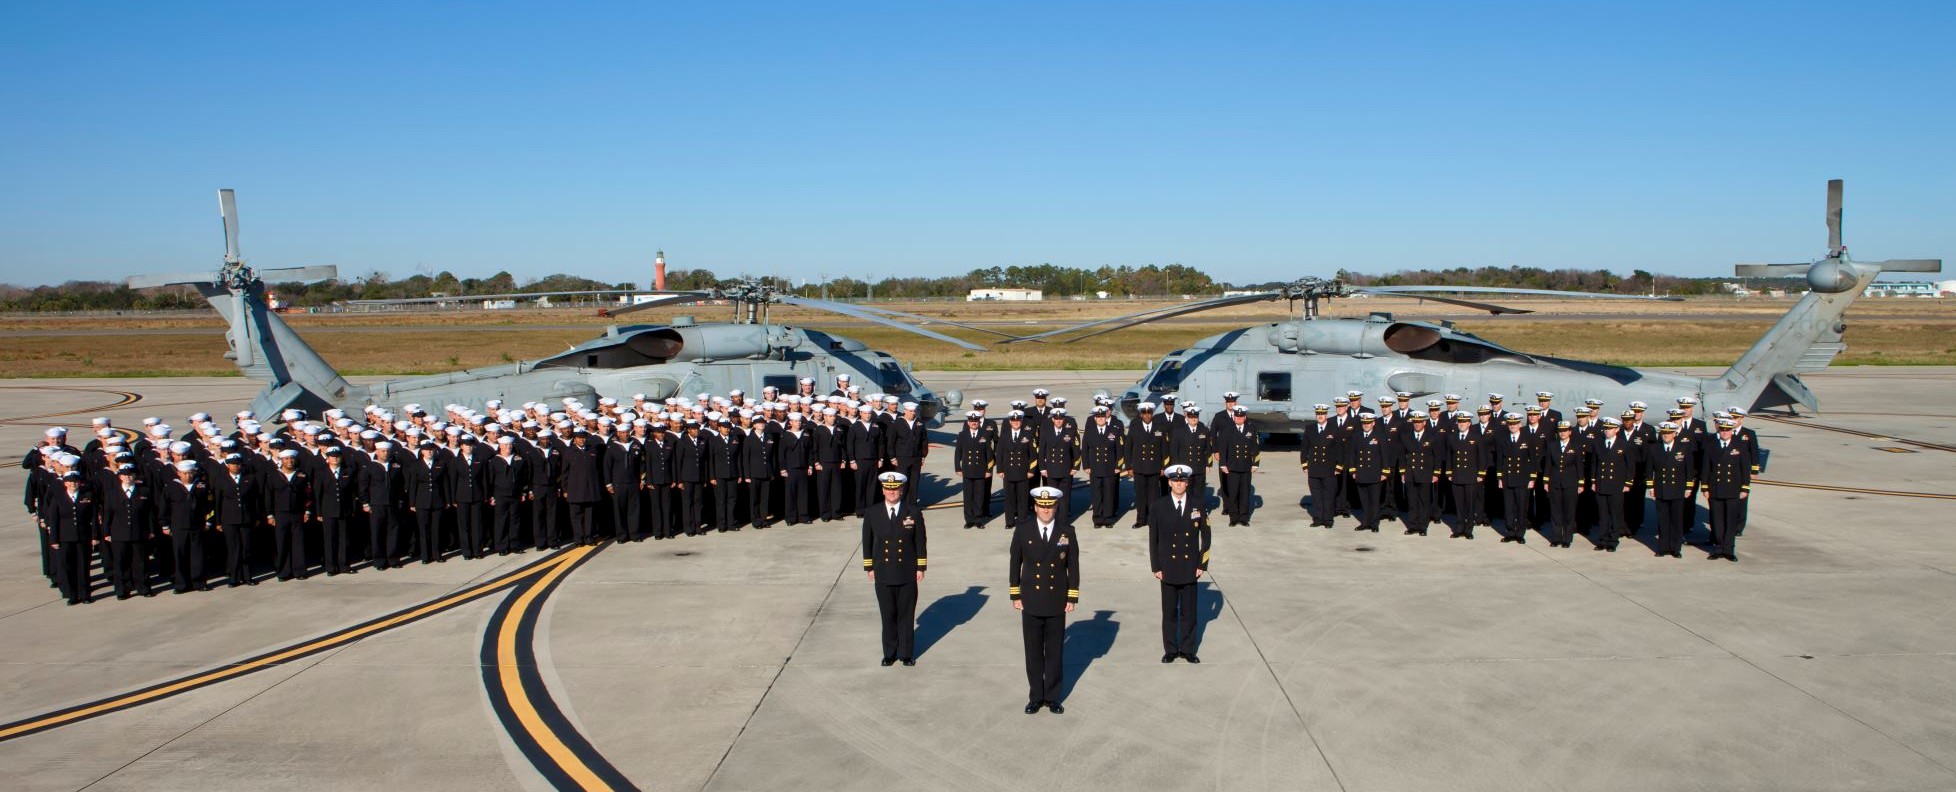 hsm-46 grandmasters helicopter maritime strike squadron mh-60r seahawk 2012 33 naval station mayport florida